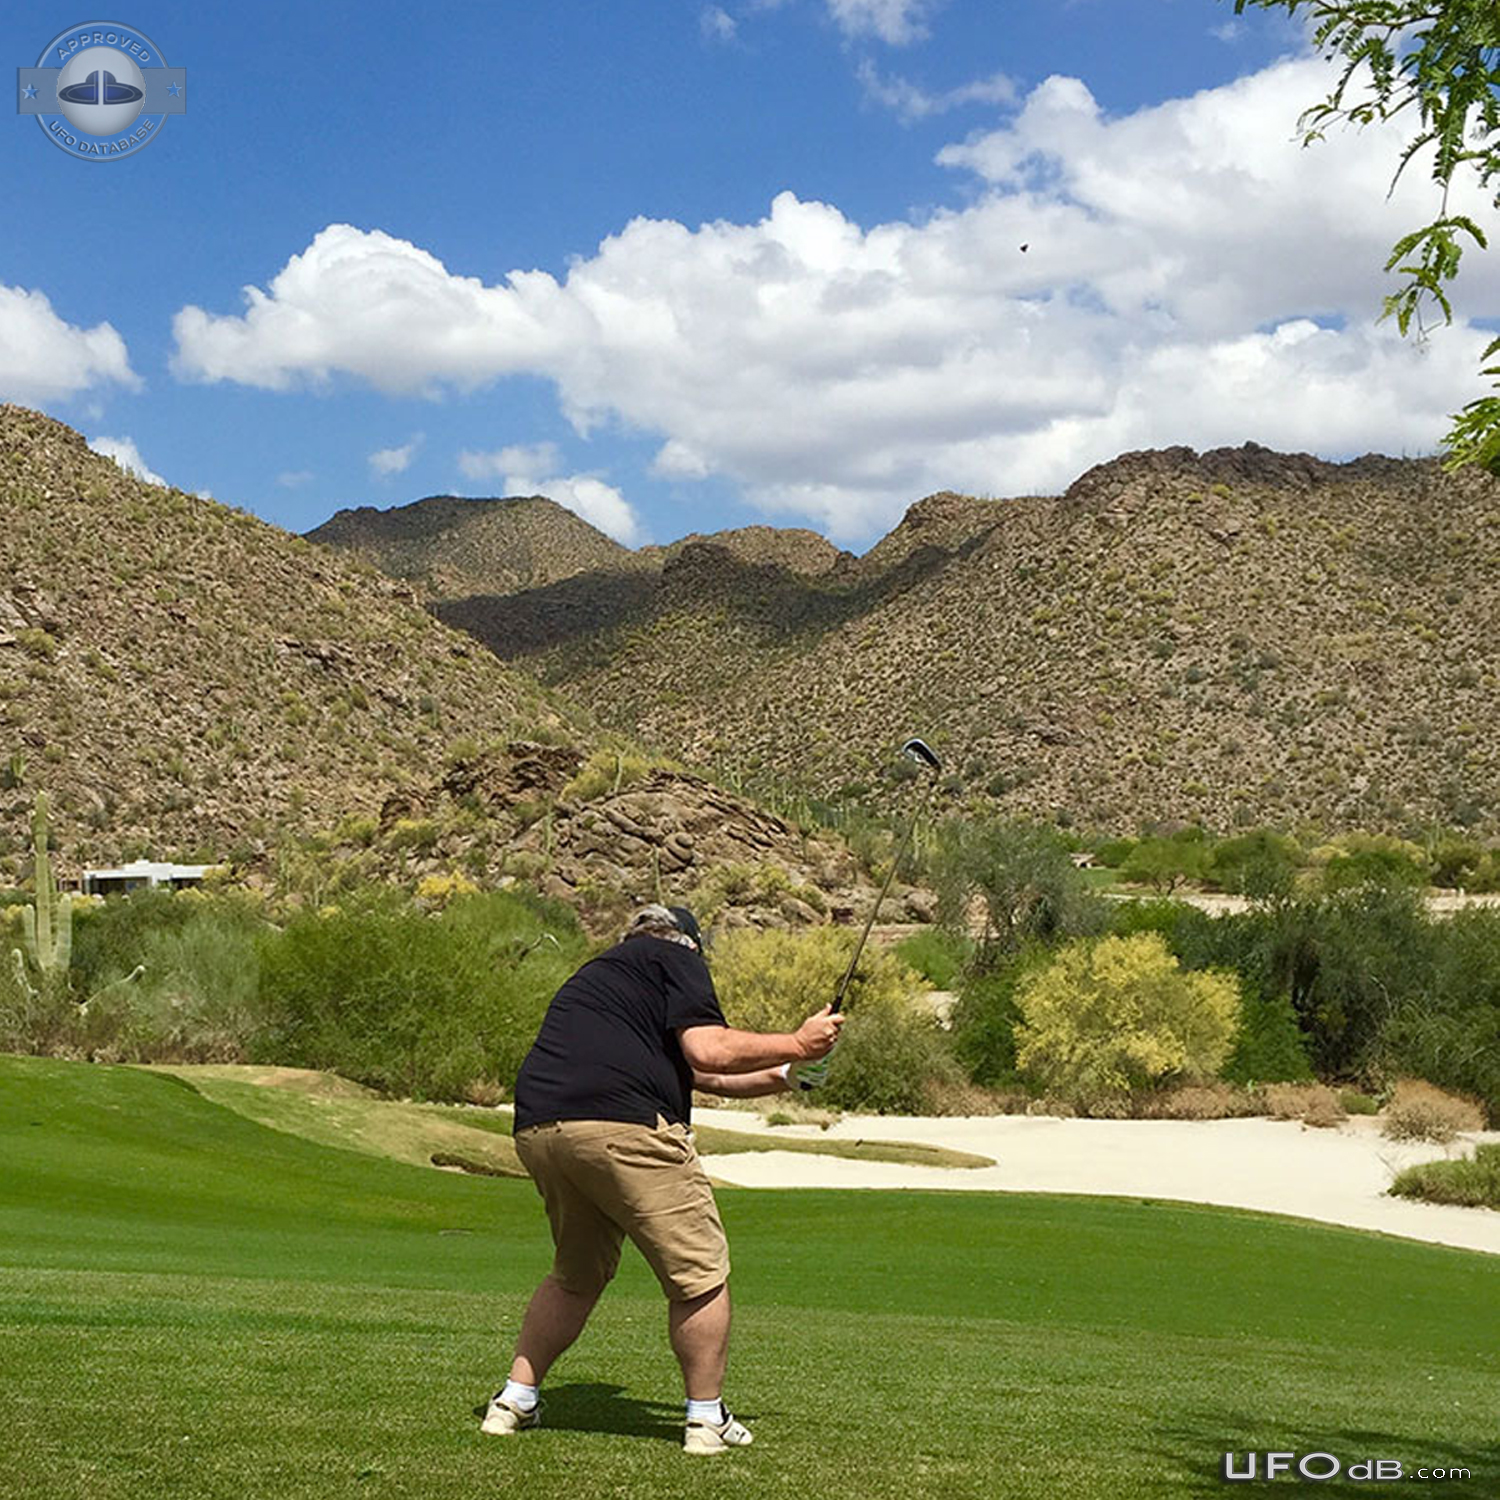 Saw UFO in photo it made no sound unlike F18s Marana Arizona USA 2015  UFO Picture #764-2